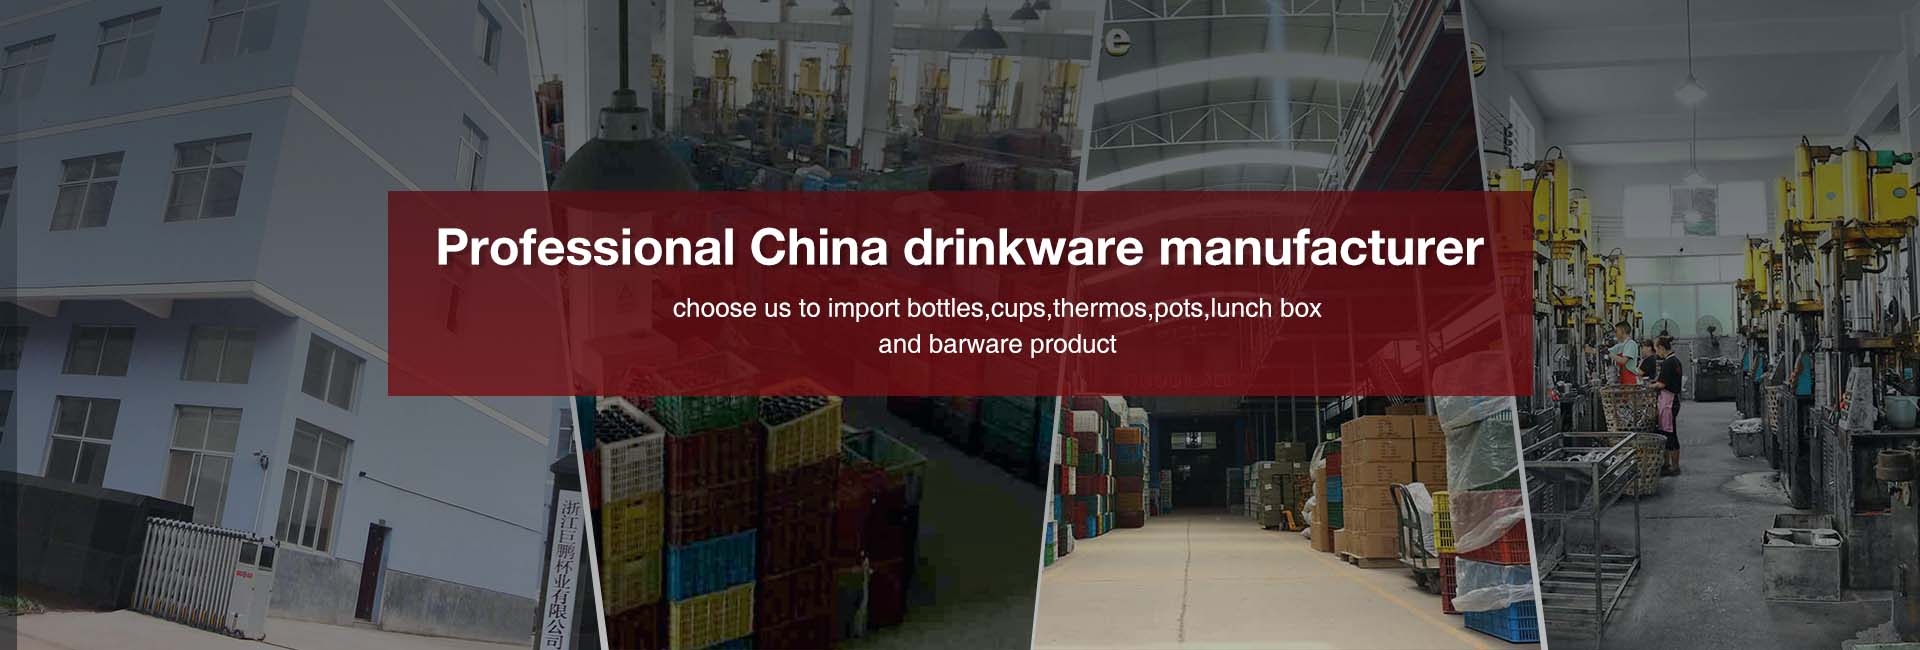 China drinkware manufacturer